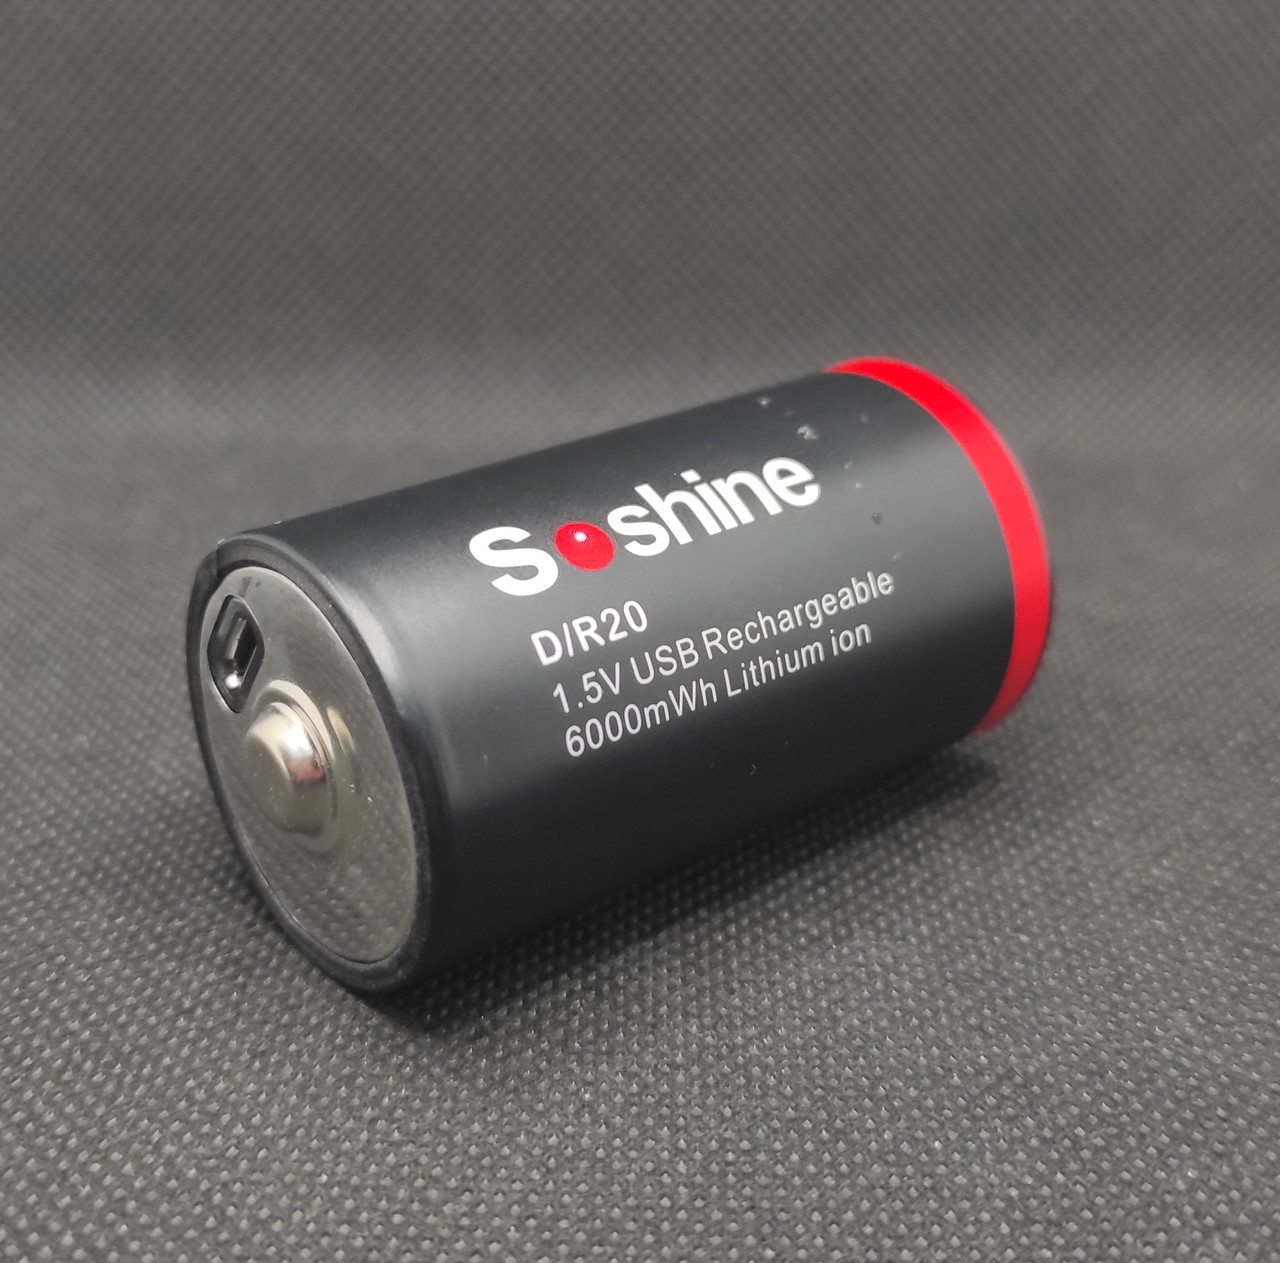 Акумулятор R20 Soshine 1,5v 6000mWh із зарядкою від microUSB (1 шт.)